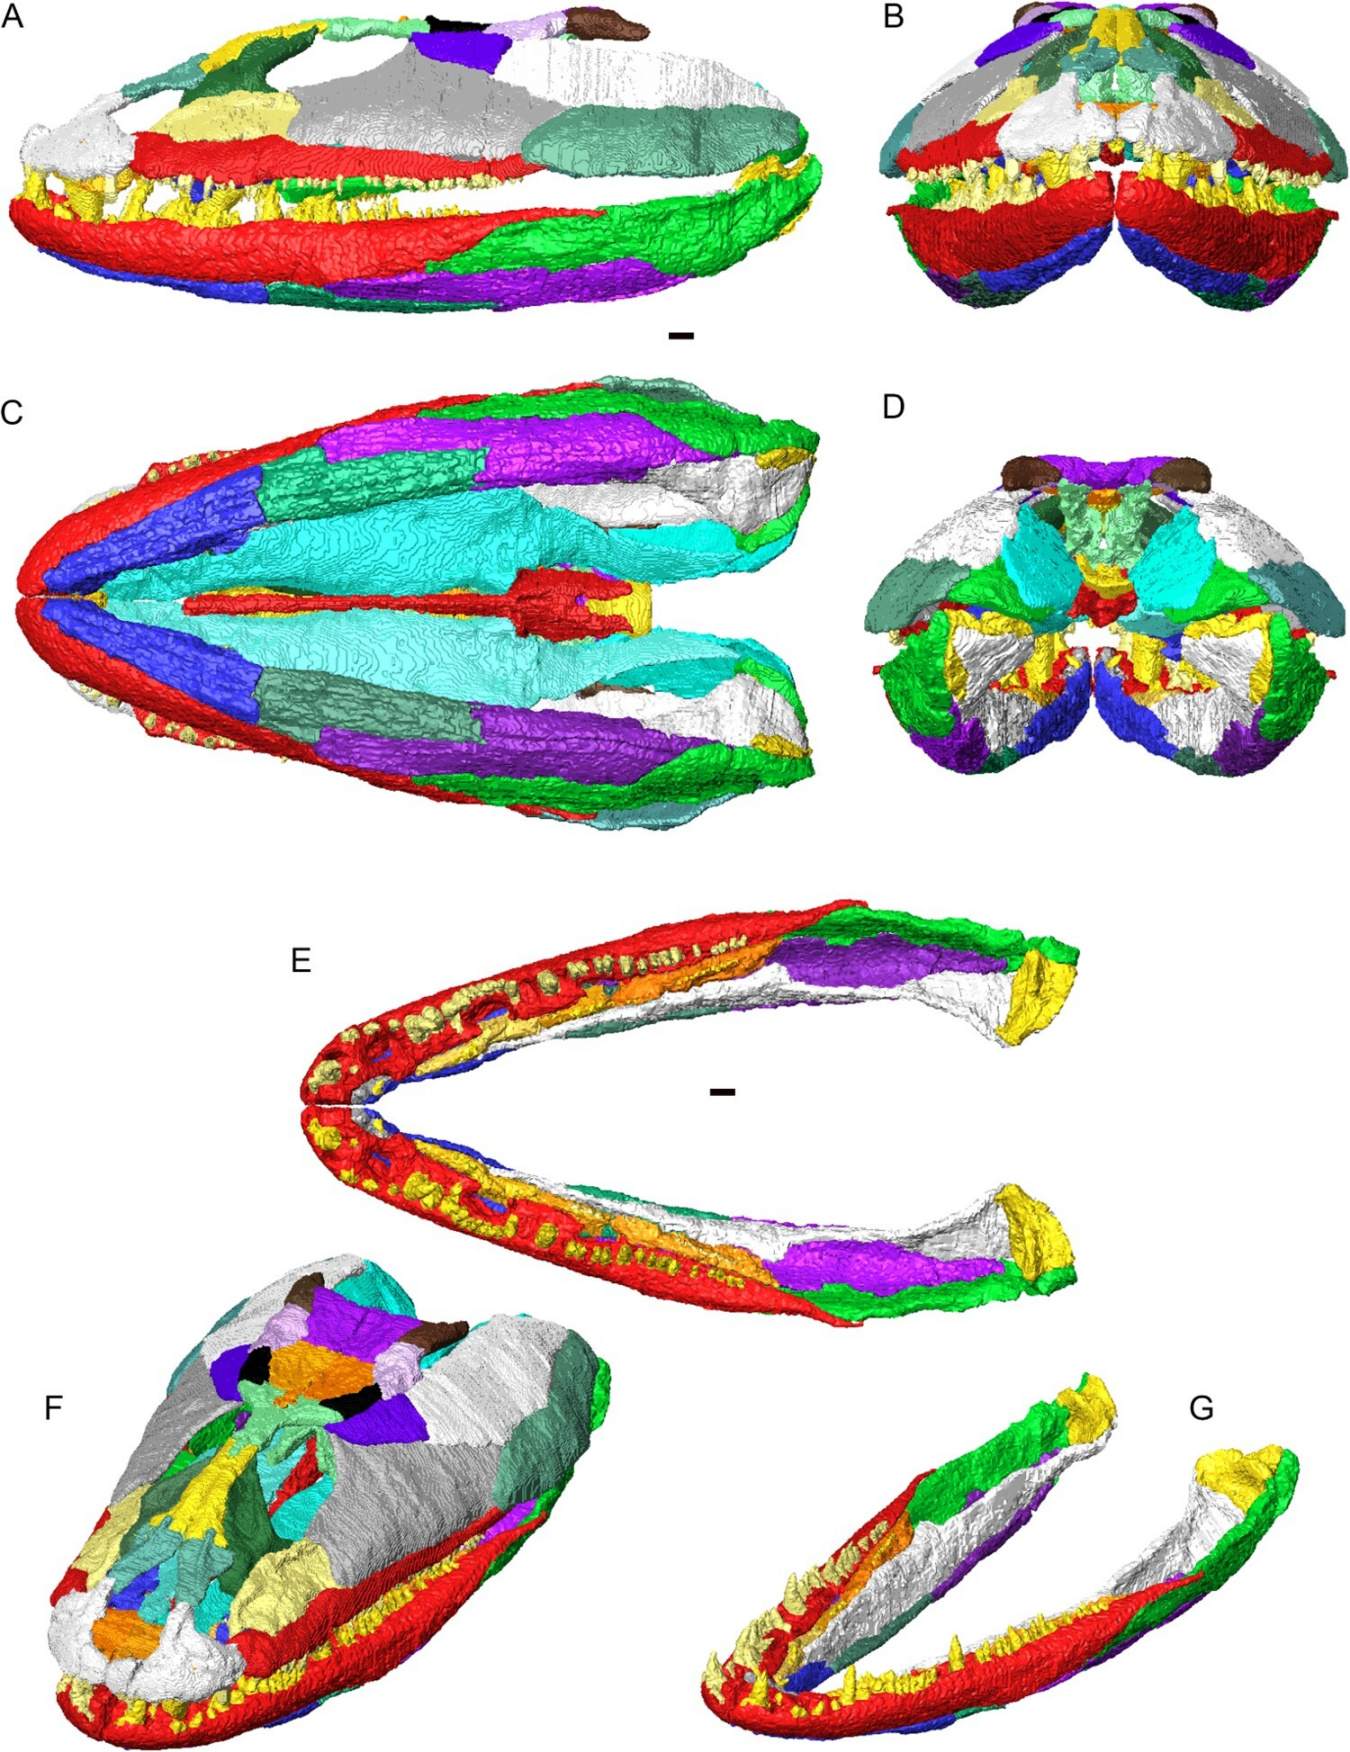 Crassigyrinus scoticus의 관절에서 두개골과 아래턱의 3D 재구성. 다른 색상으로 표시된 개별 뼈. A, 왼쪽 측면 보기; B, 전방 보기; C, 복부 보기; D, 후방 보기; E, 등쪽 보기에서 연결된 아래턱(두개골 없음); F, 등측 사면에서 본 두개골 및 아래턱; G, 배측 사시도에서 관절로 연결된 아래턱.